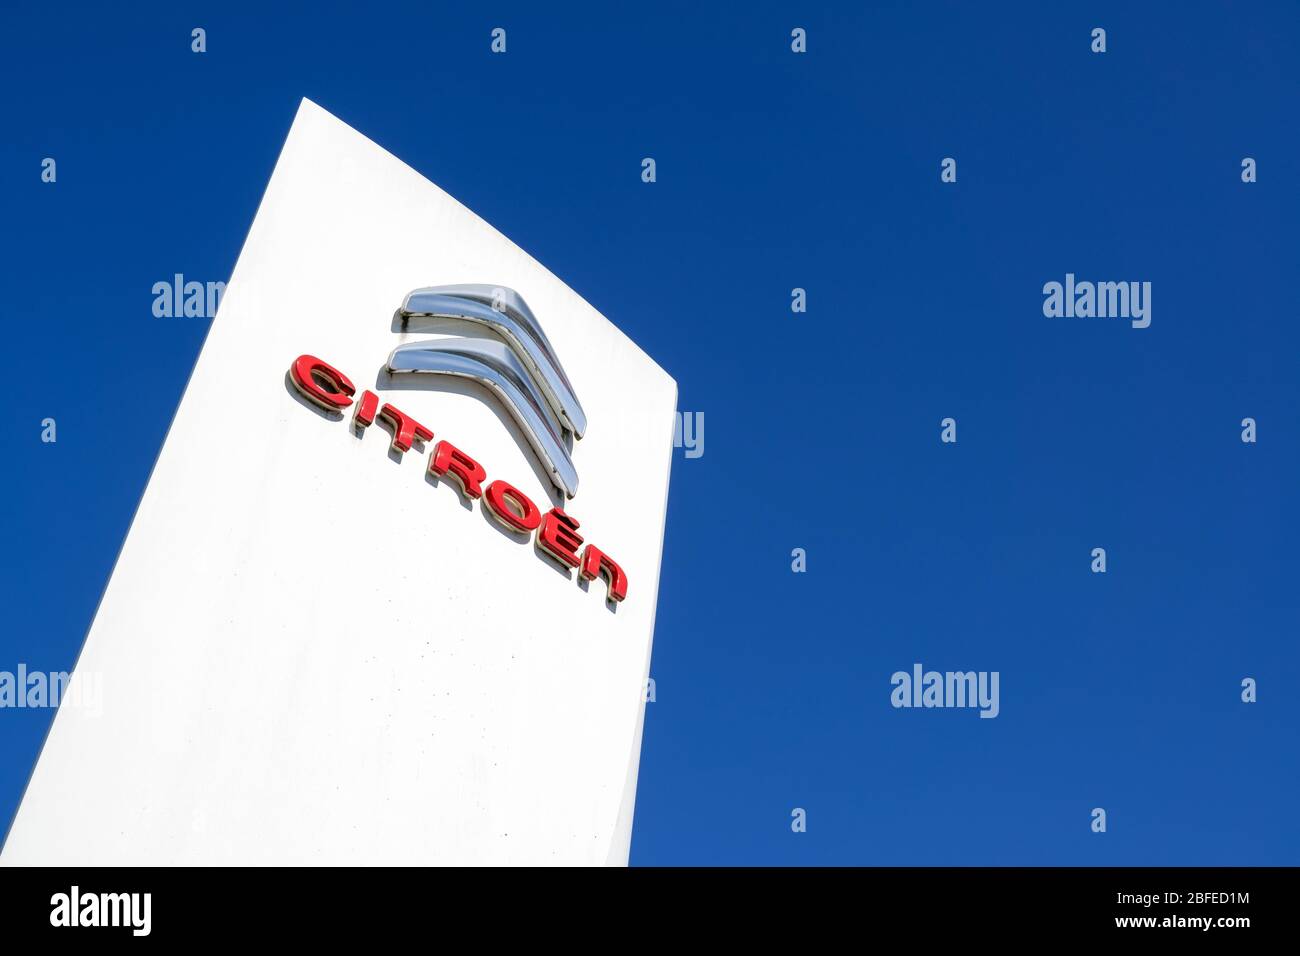 Citroen dealership sign against blue sky. Stock Photo